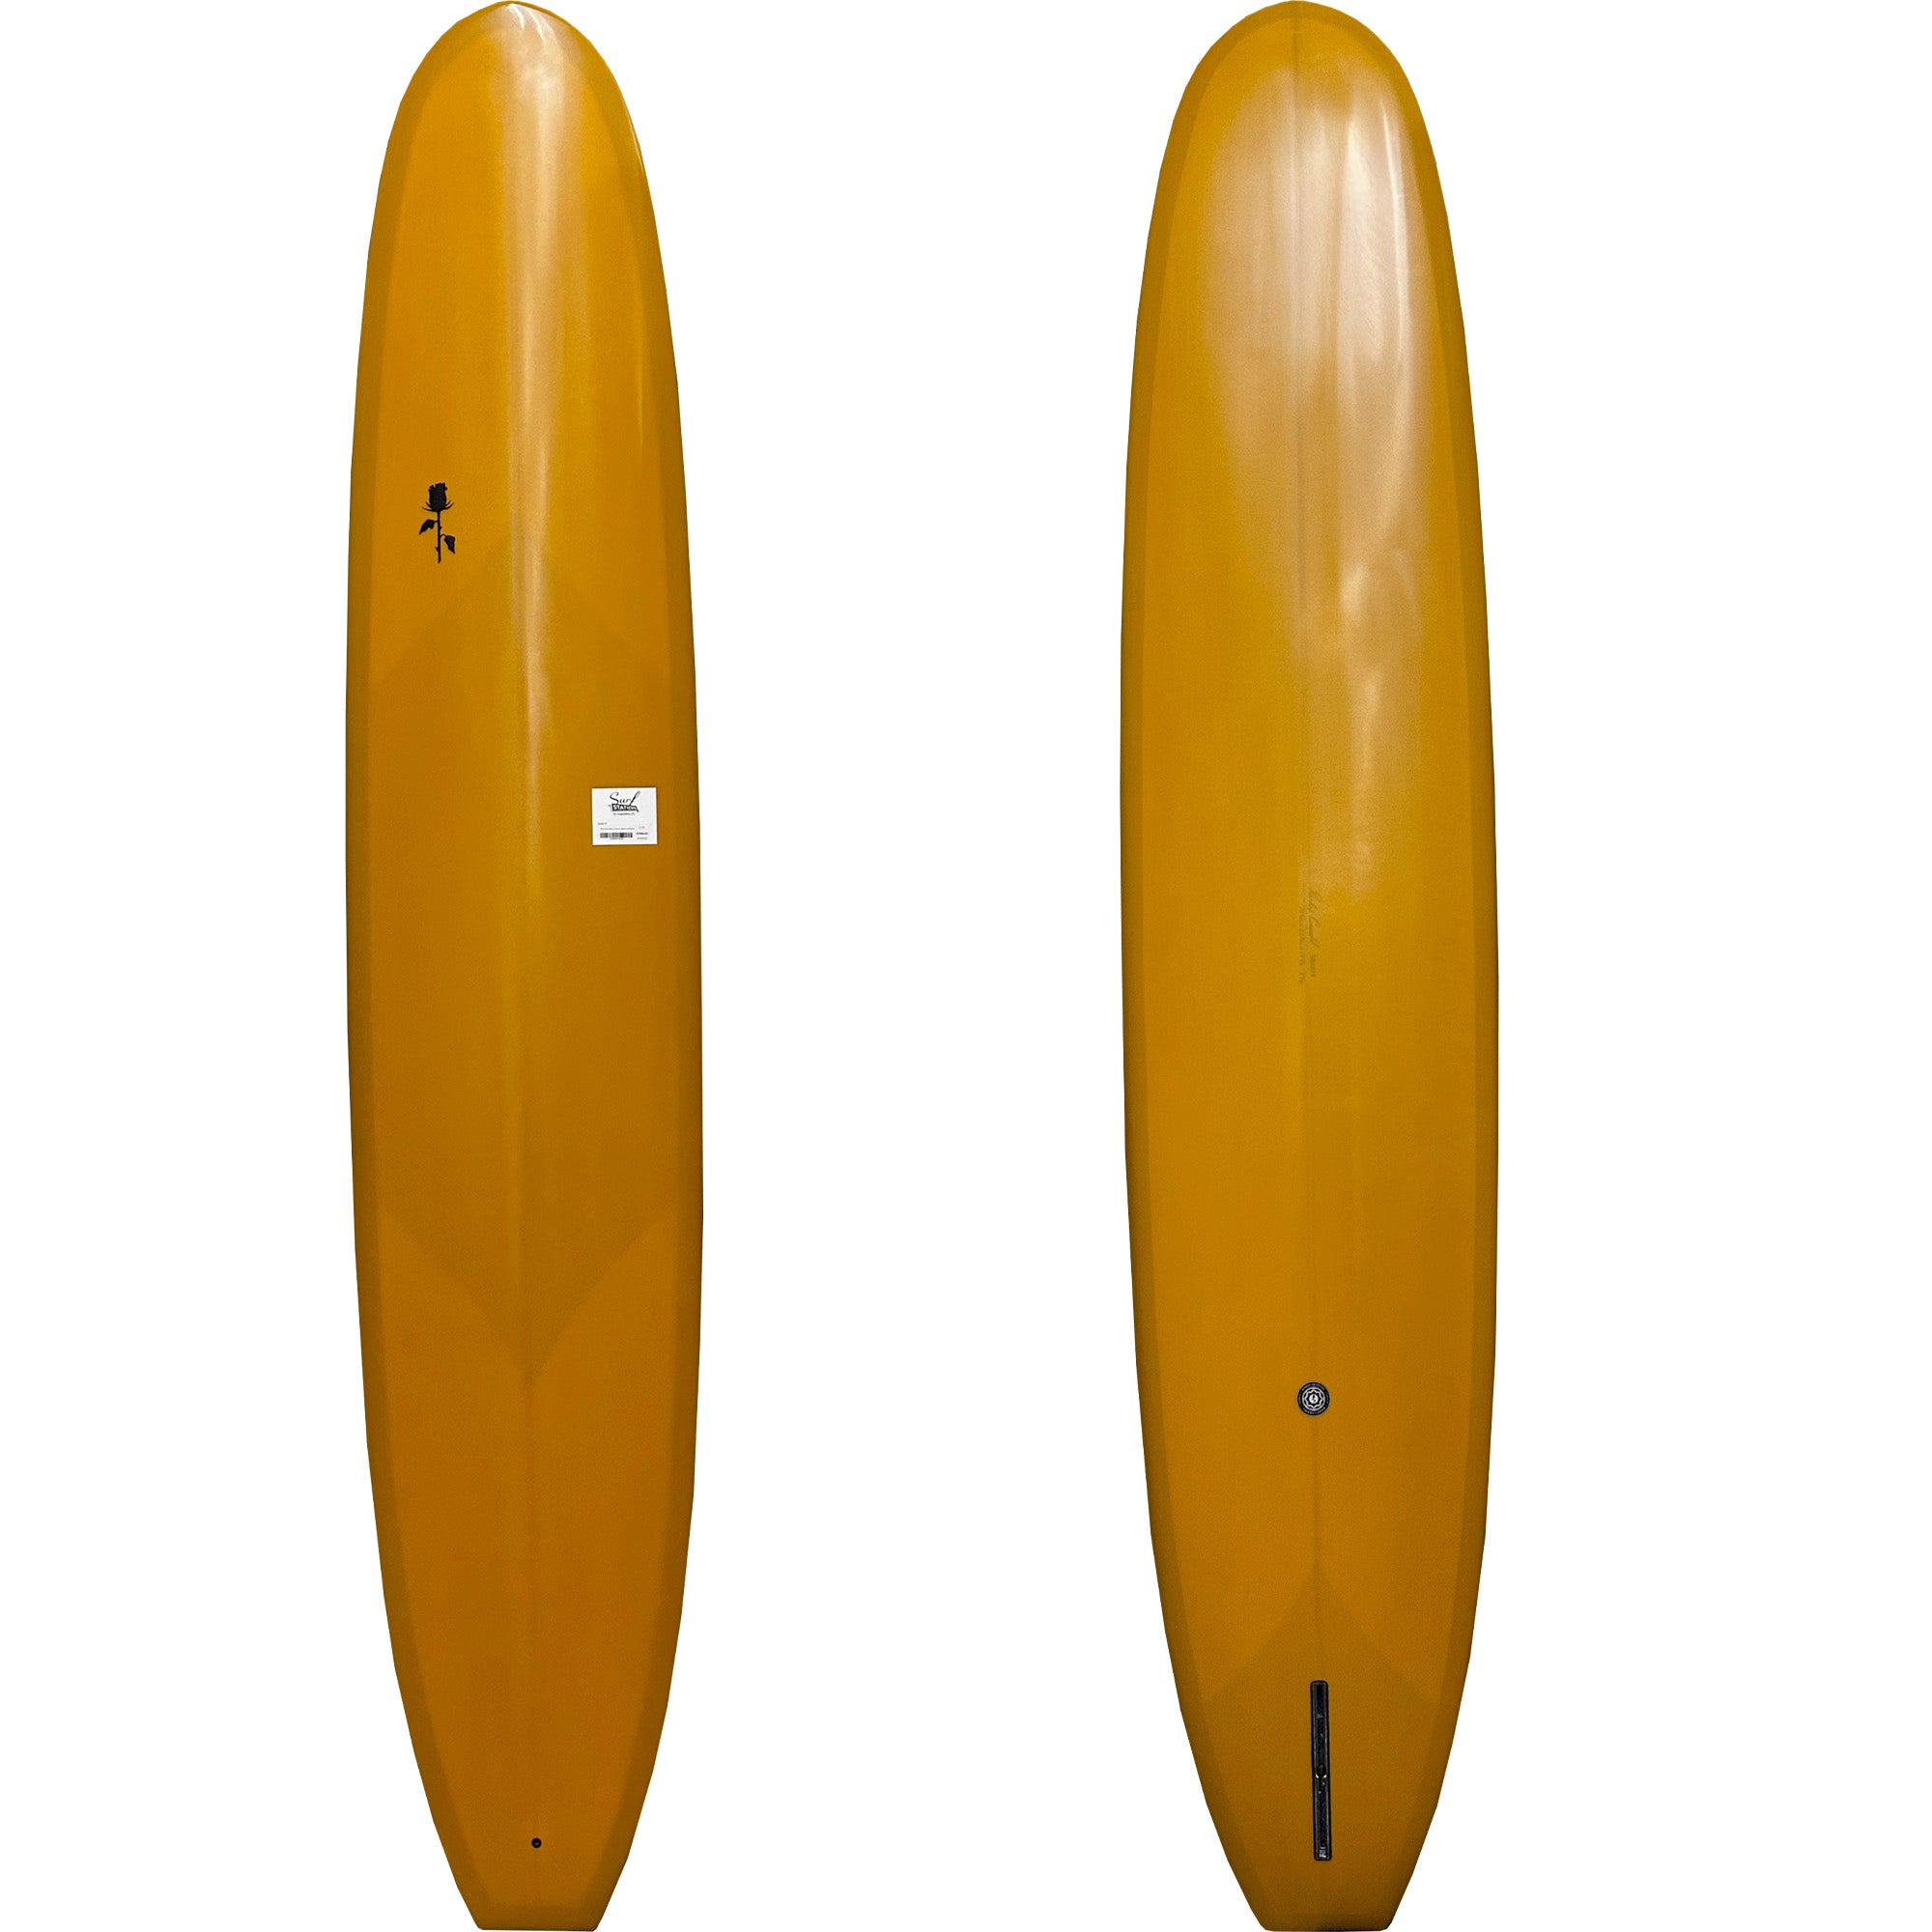 Black Rose Mfg. CC Clone Longboard Surfboard